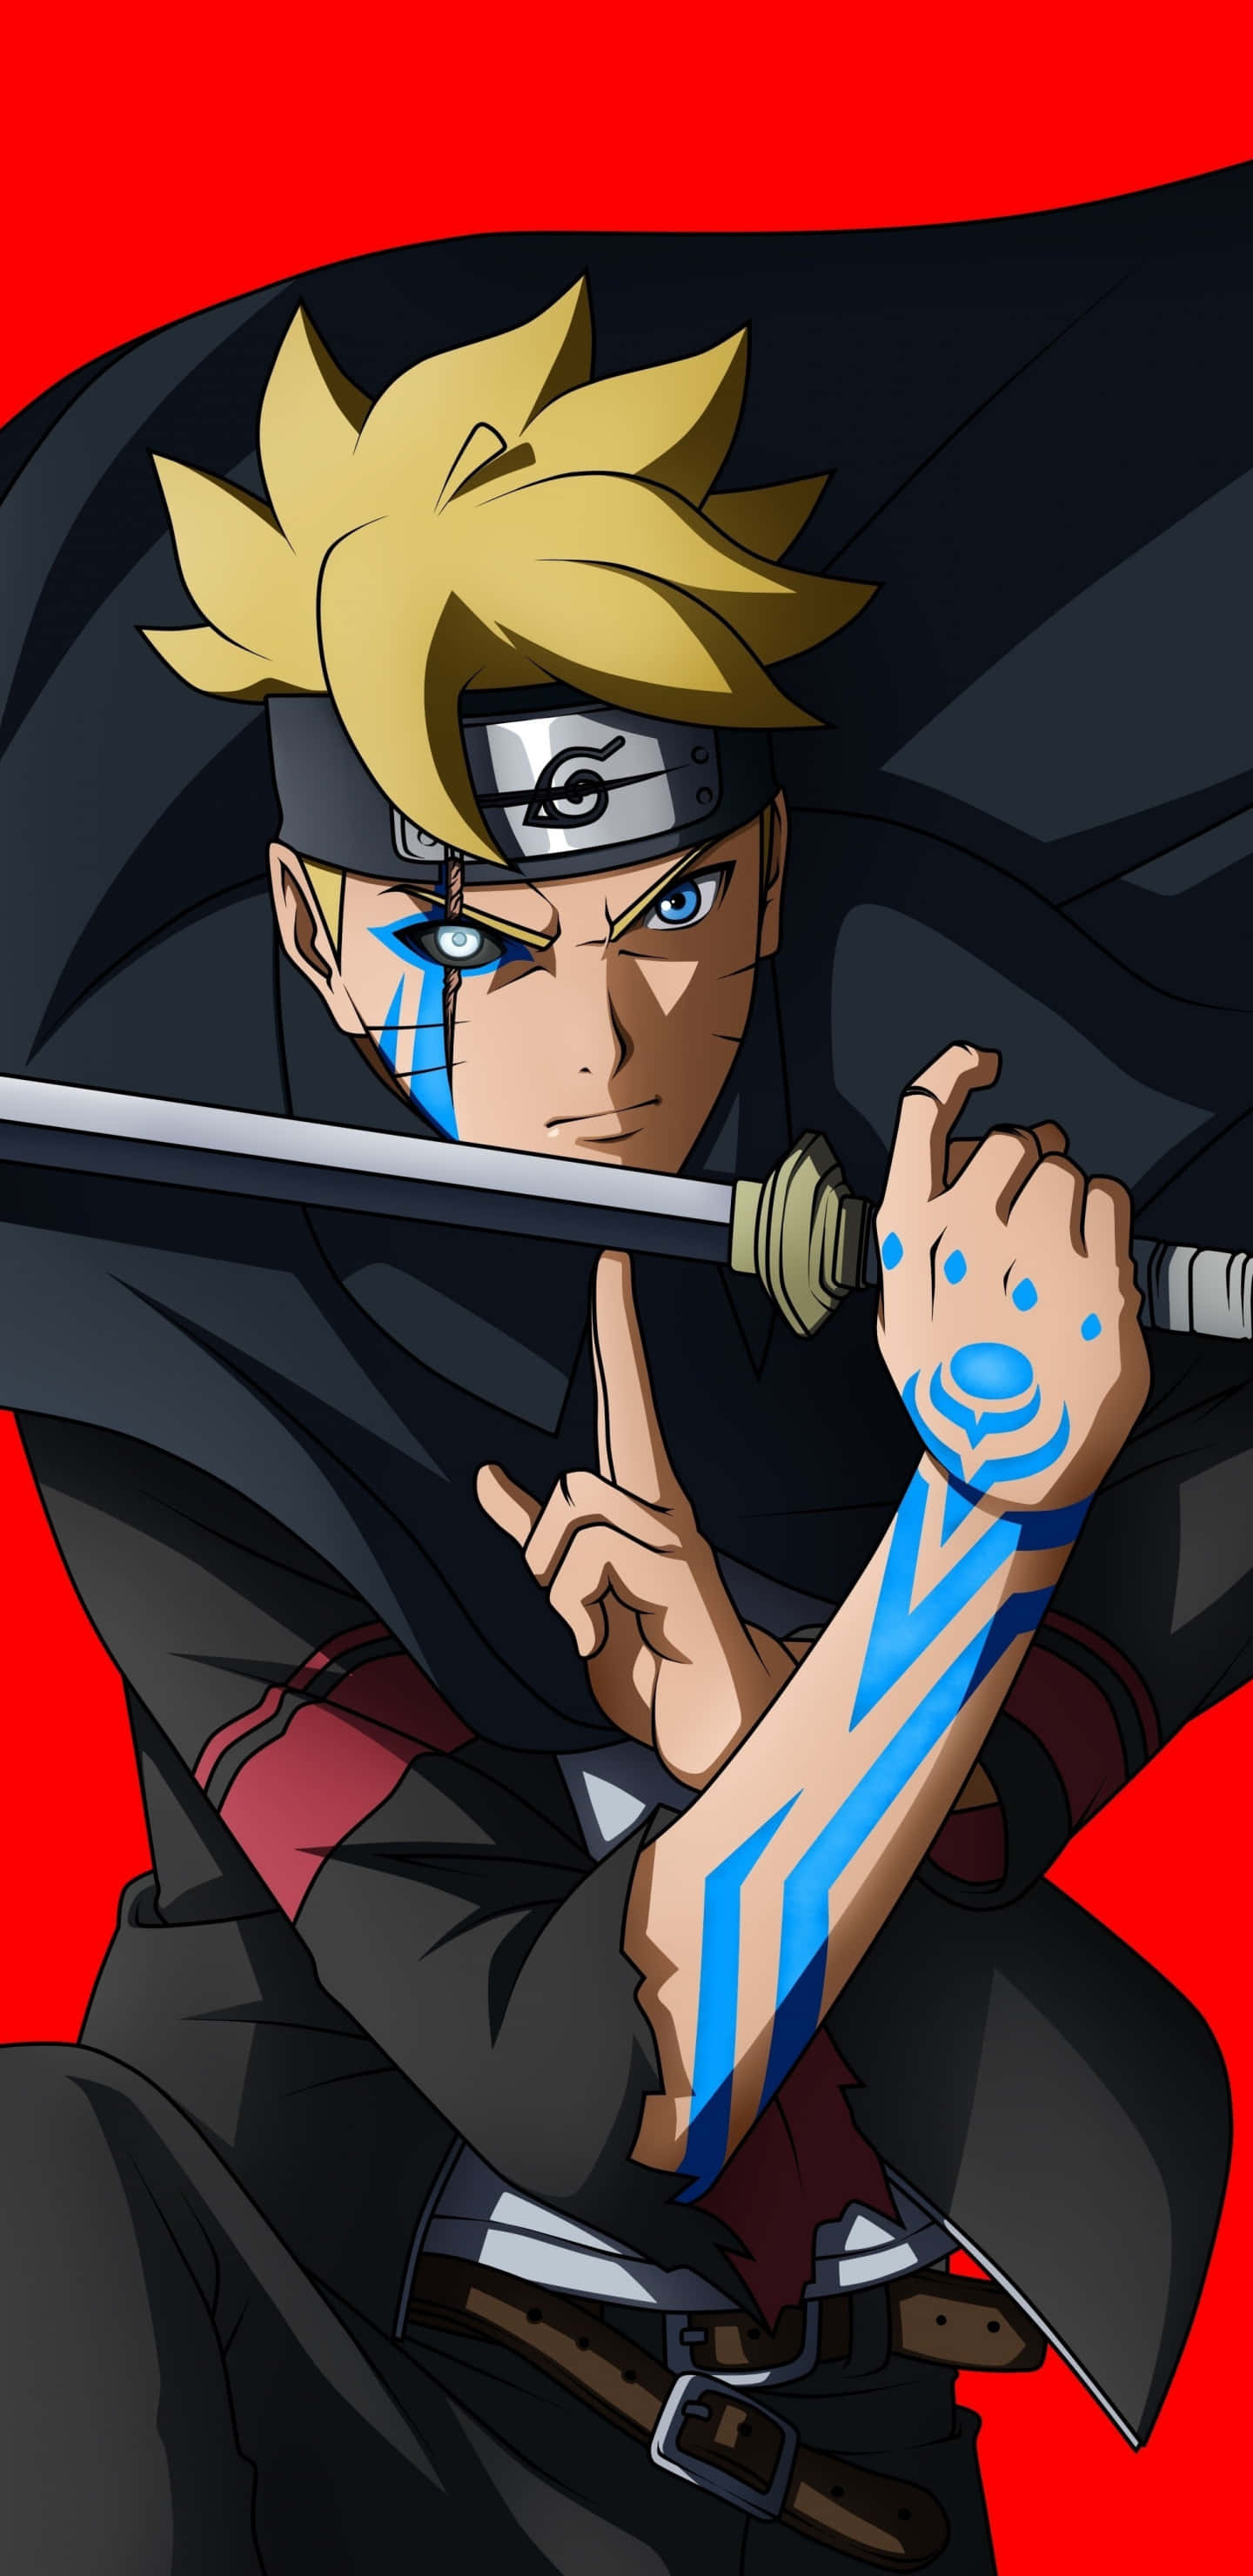 Naruto Uzumaki Takes On A Fearless Stance Wallpaper